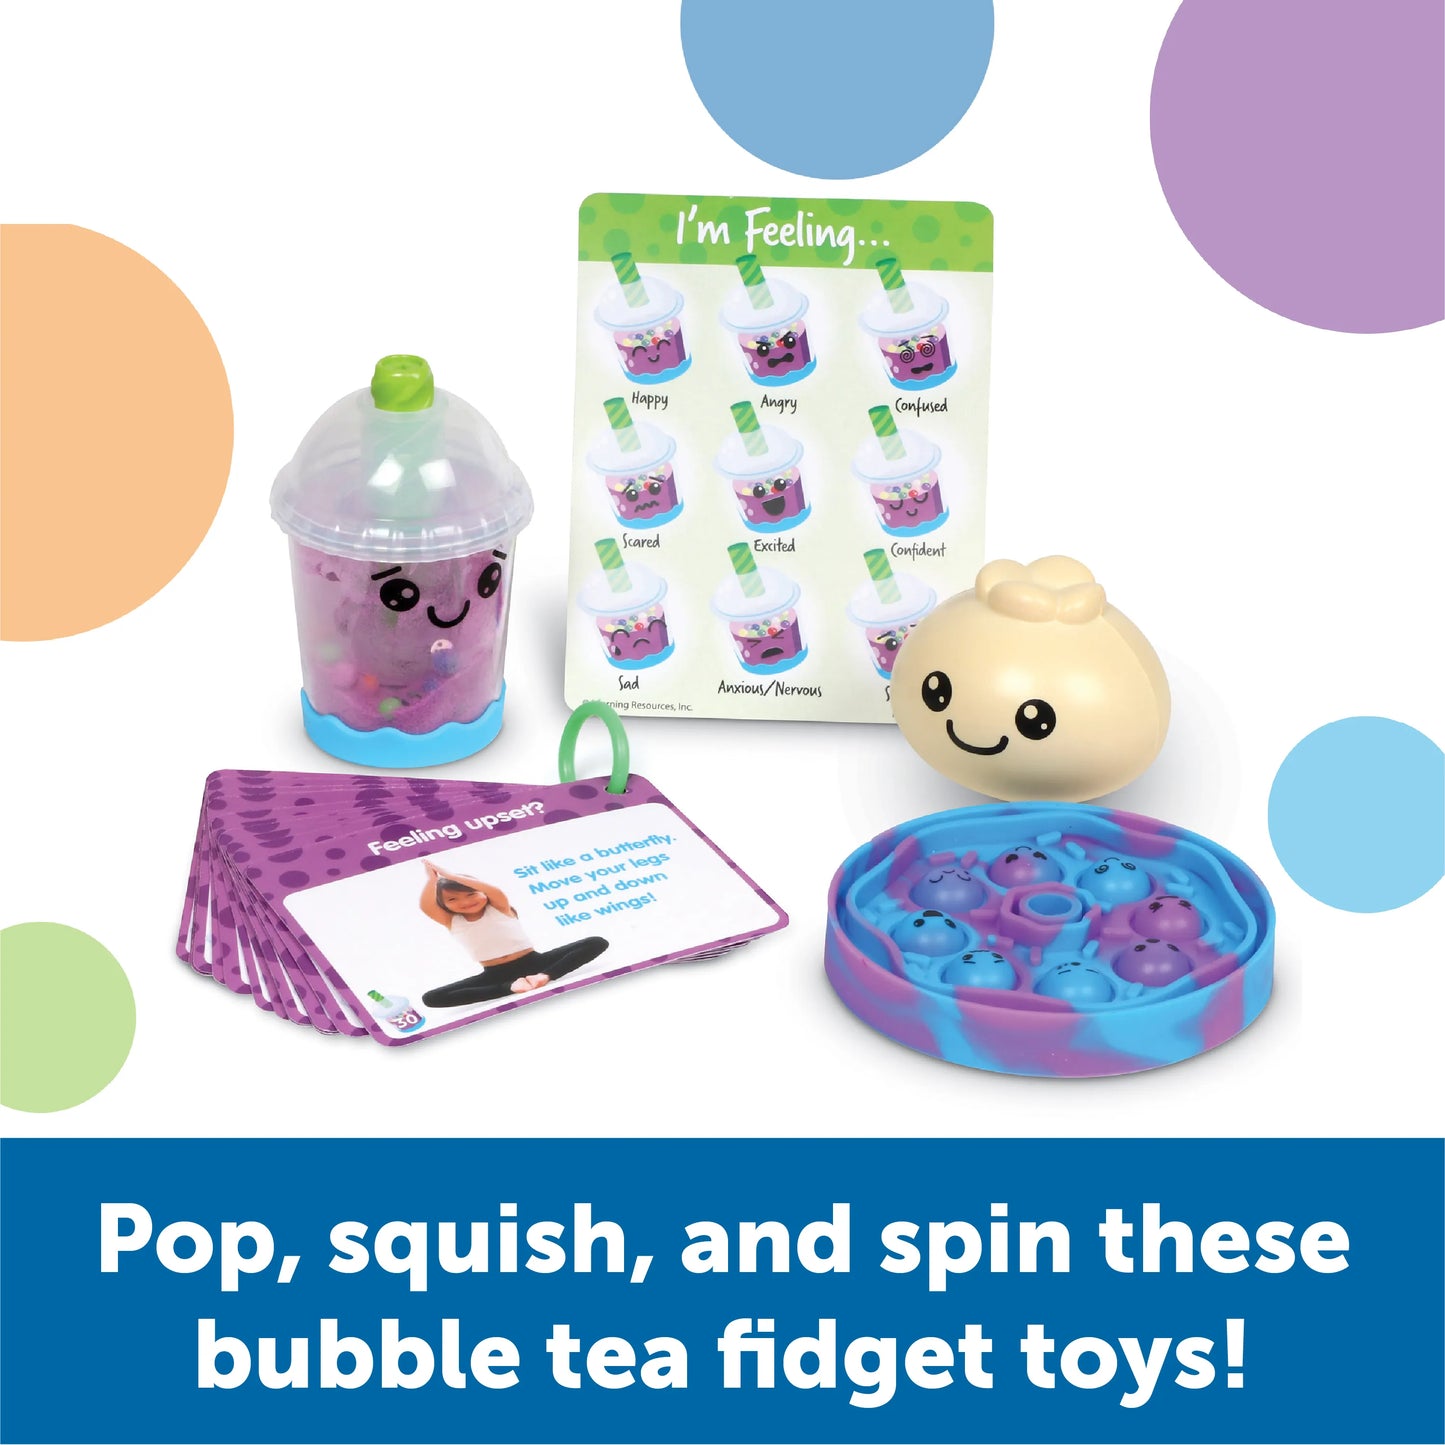 Learning Resources Bubble Tea Break! Sensory Fidget Activity Set Emotional & Calming Toys